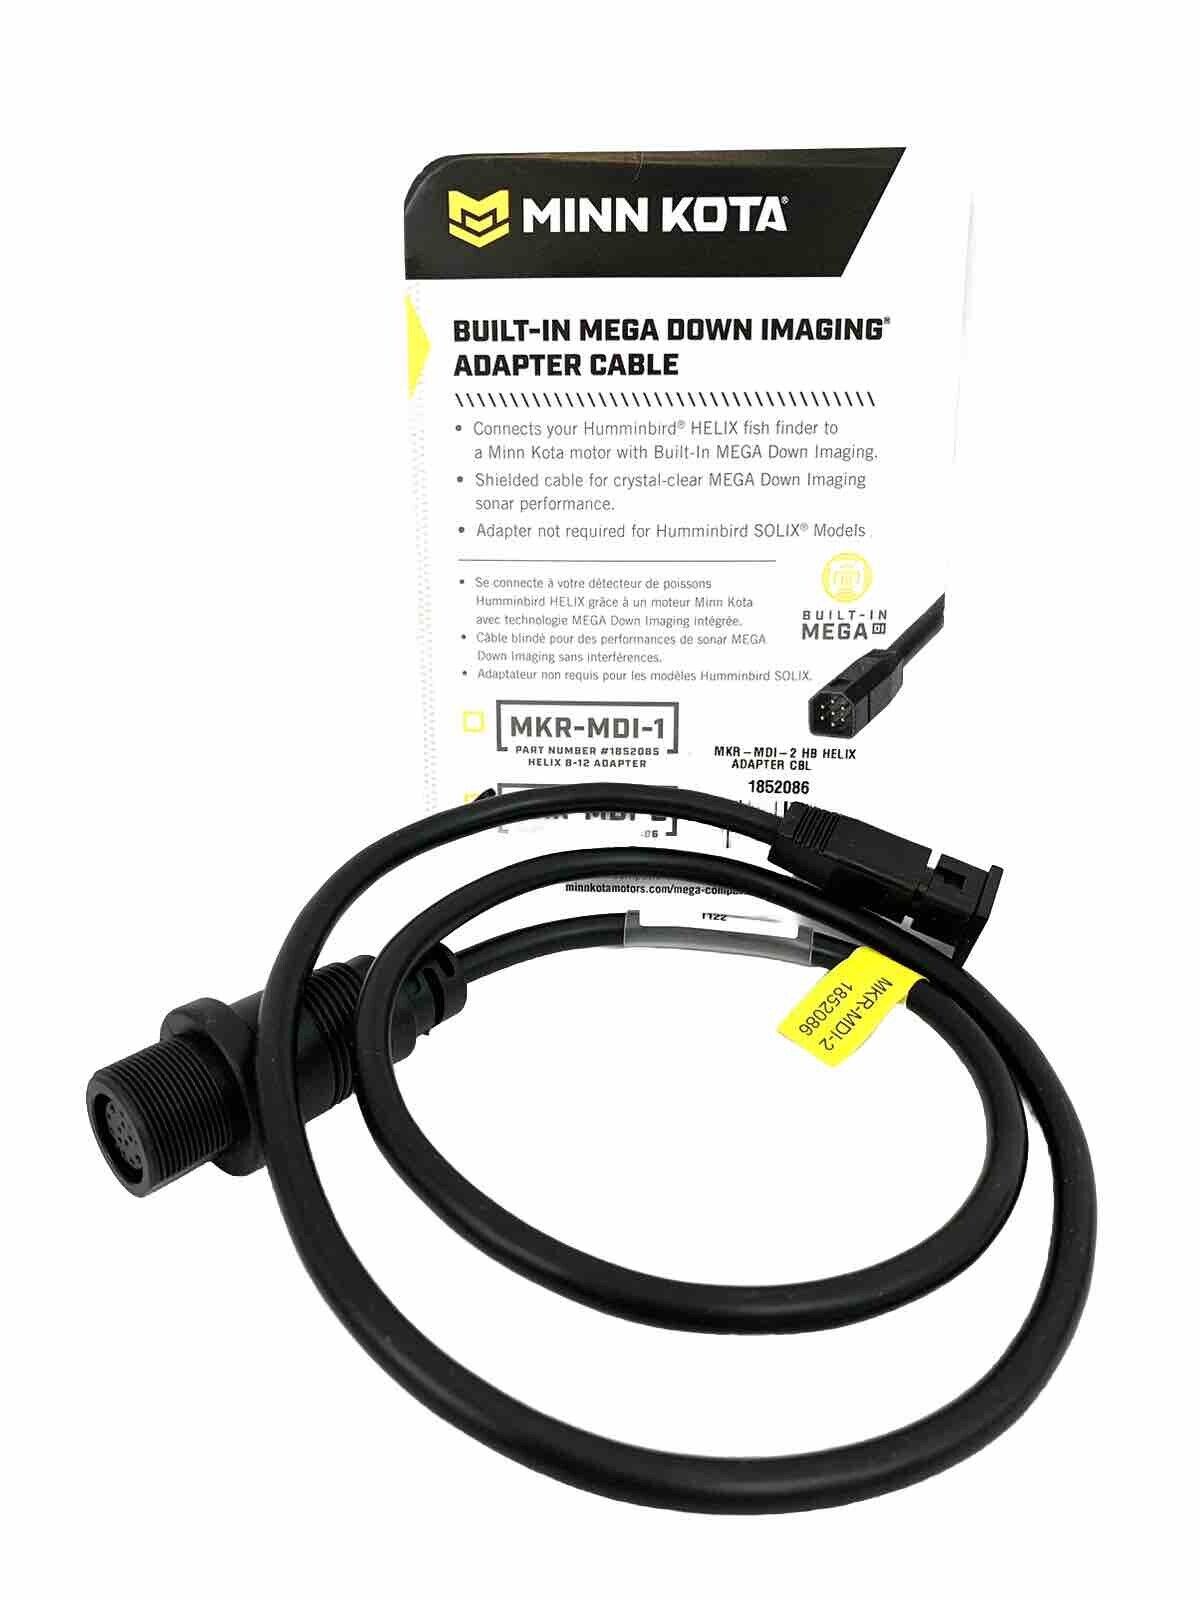 Minn Kota 1852086 MKR MDI-2 HB Helix-7 Adapter Cable